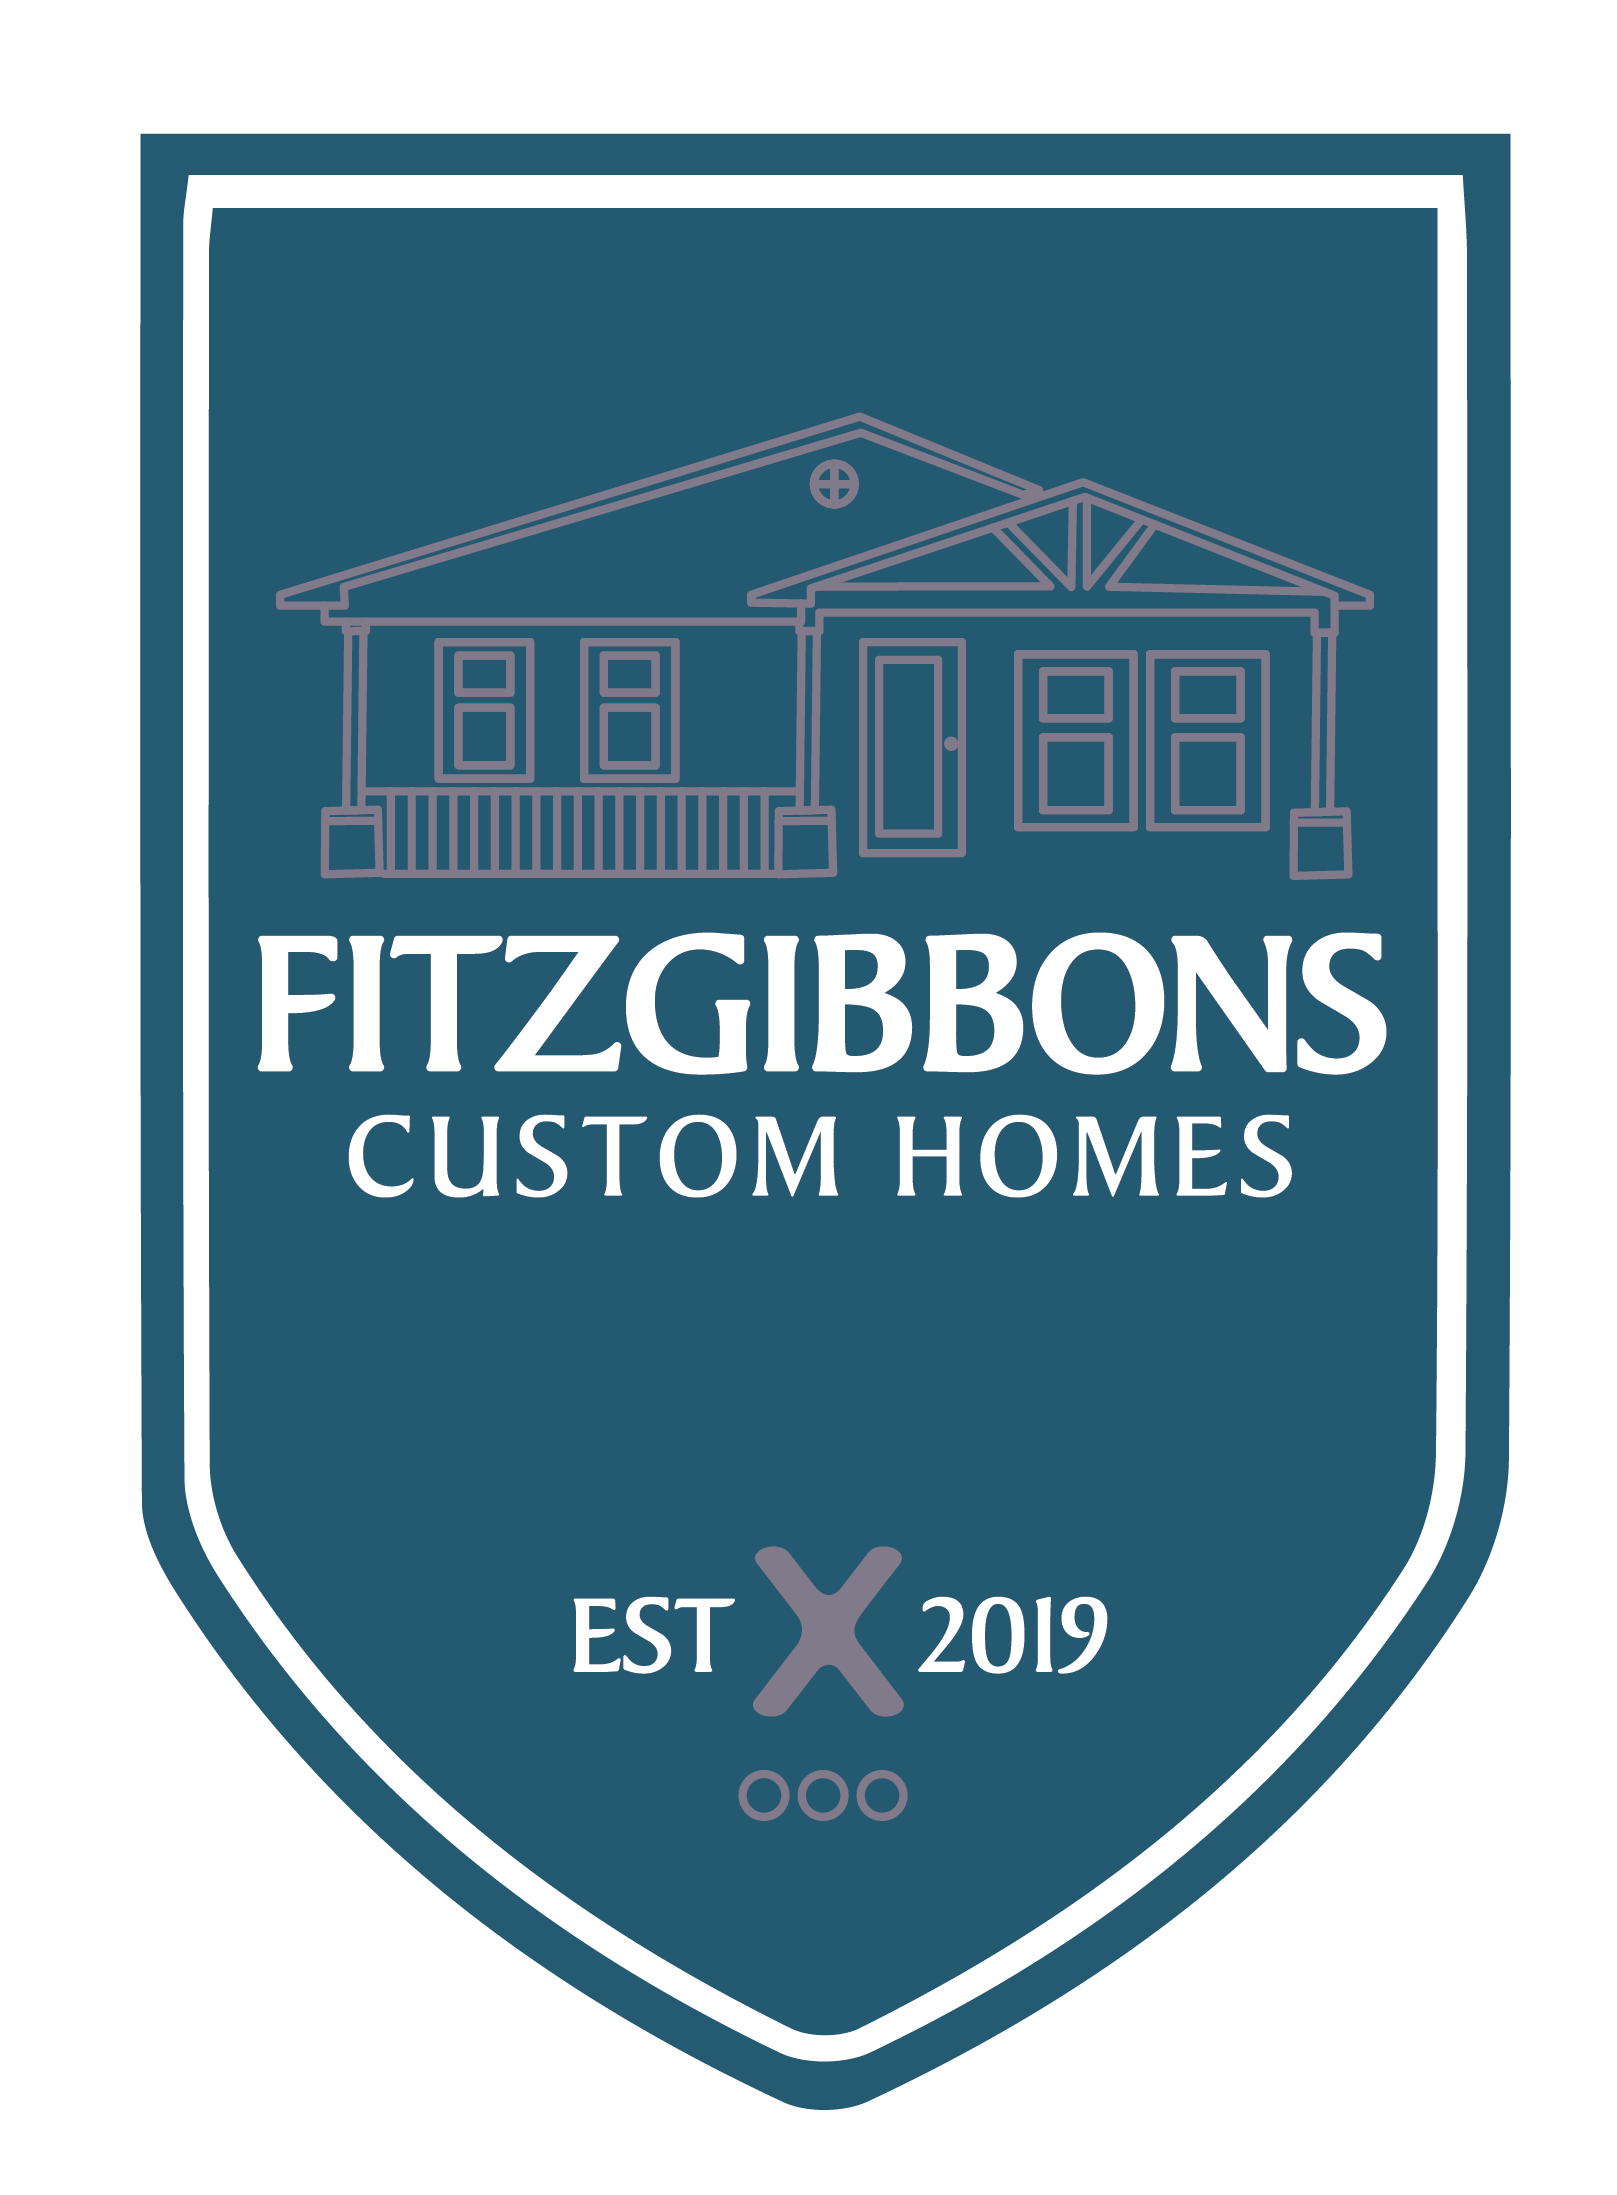 Fitzgibbons Custom Homes